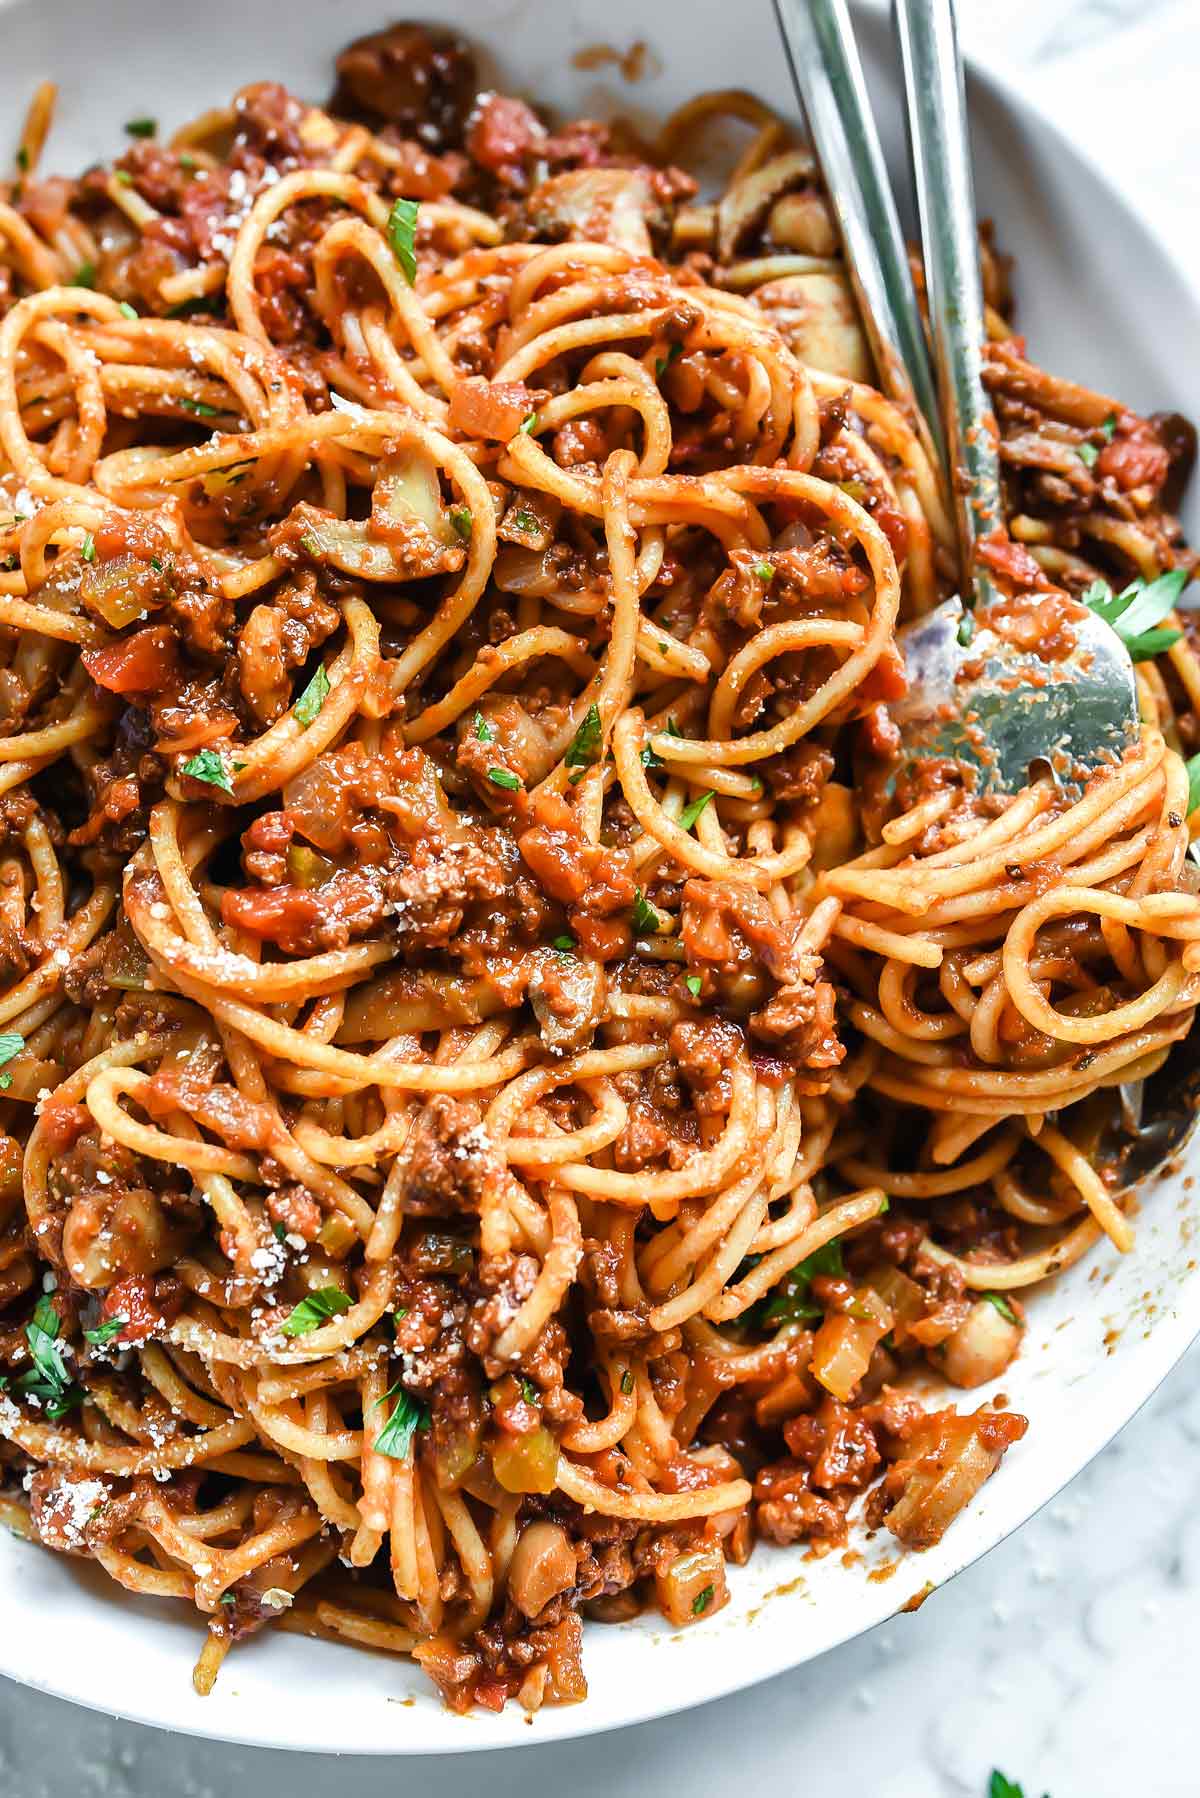 My Mom's Homemade Spaghetti and Meat Sauce | foodiecrush.com